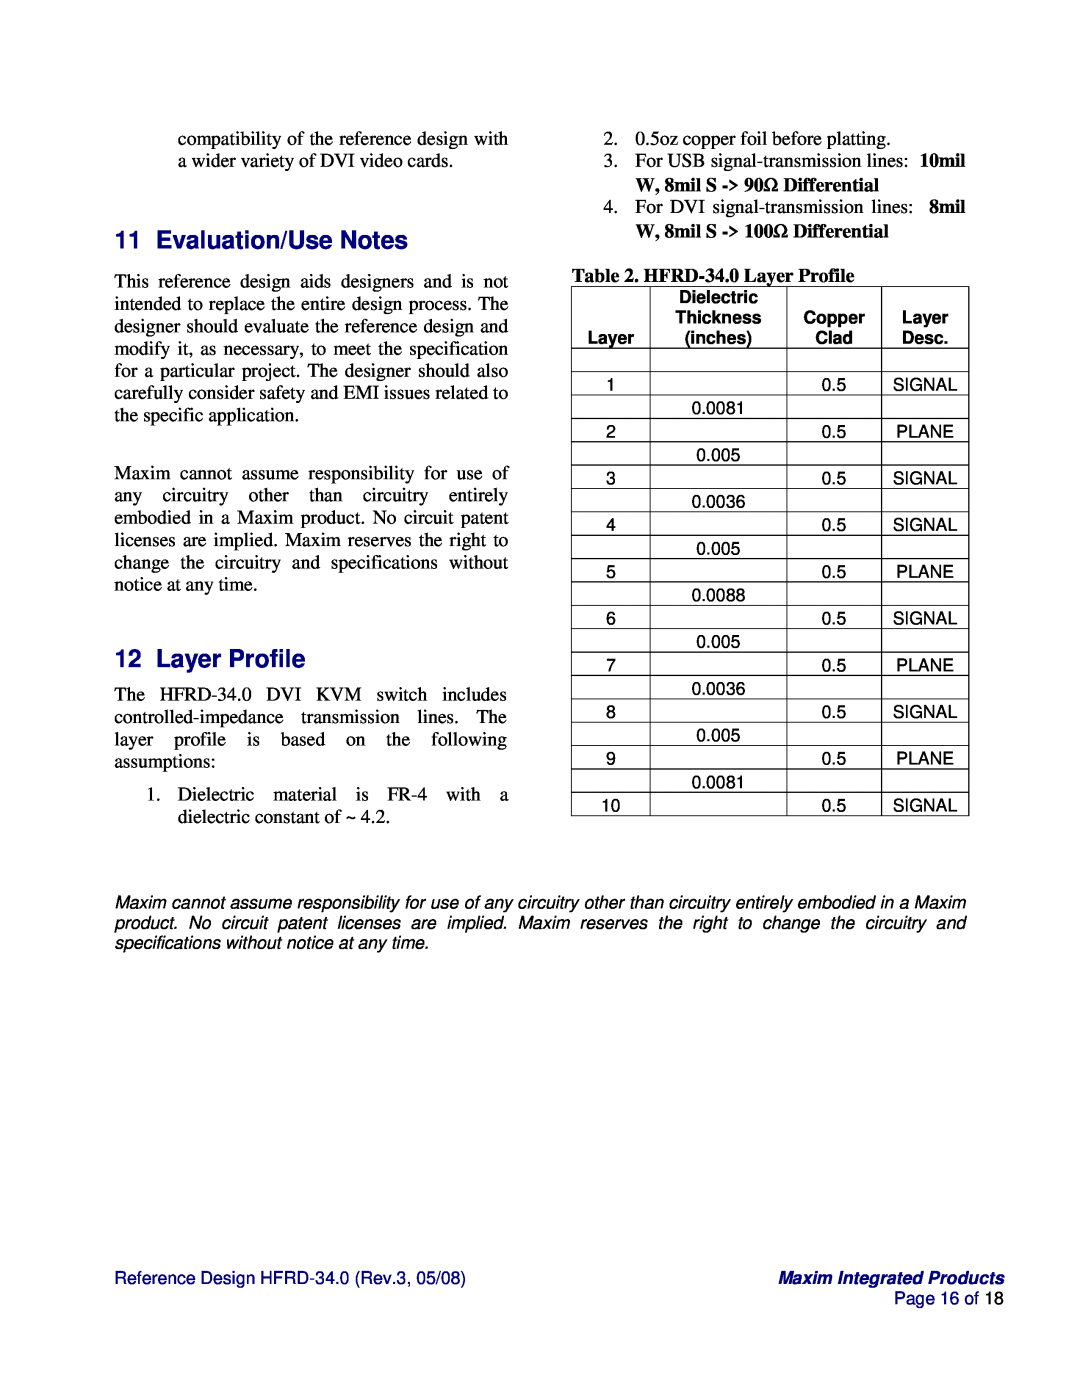 Maxim manual Evaluation/Use Notes, HFRD-34.0 Layer Profile 